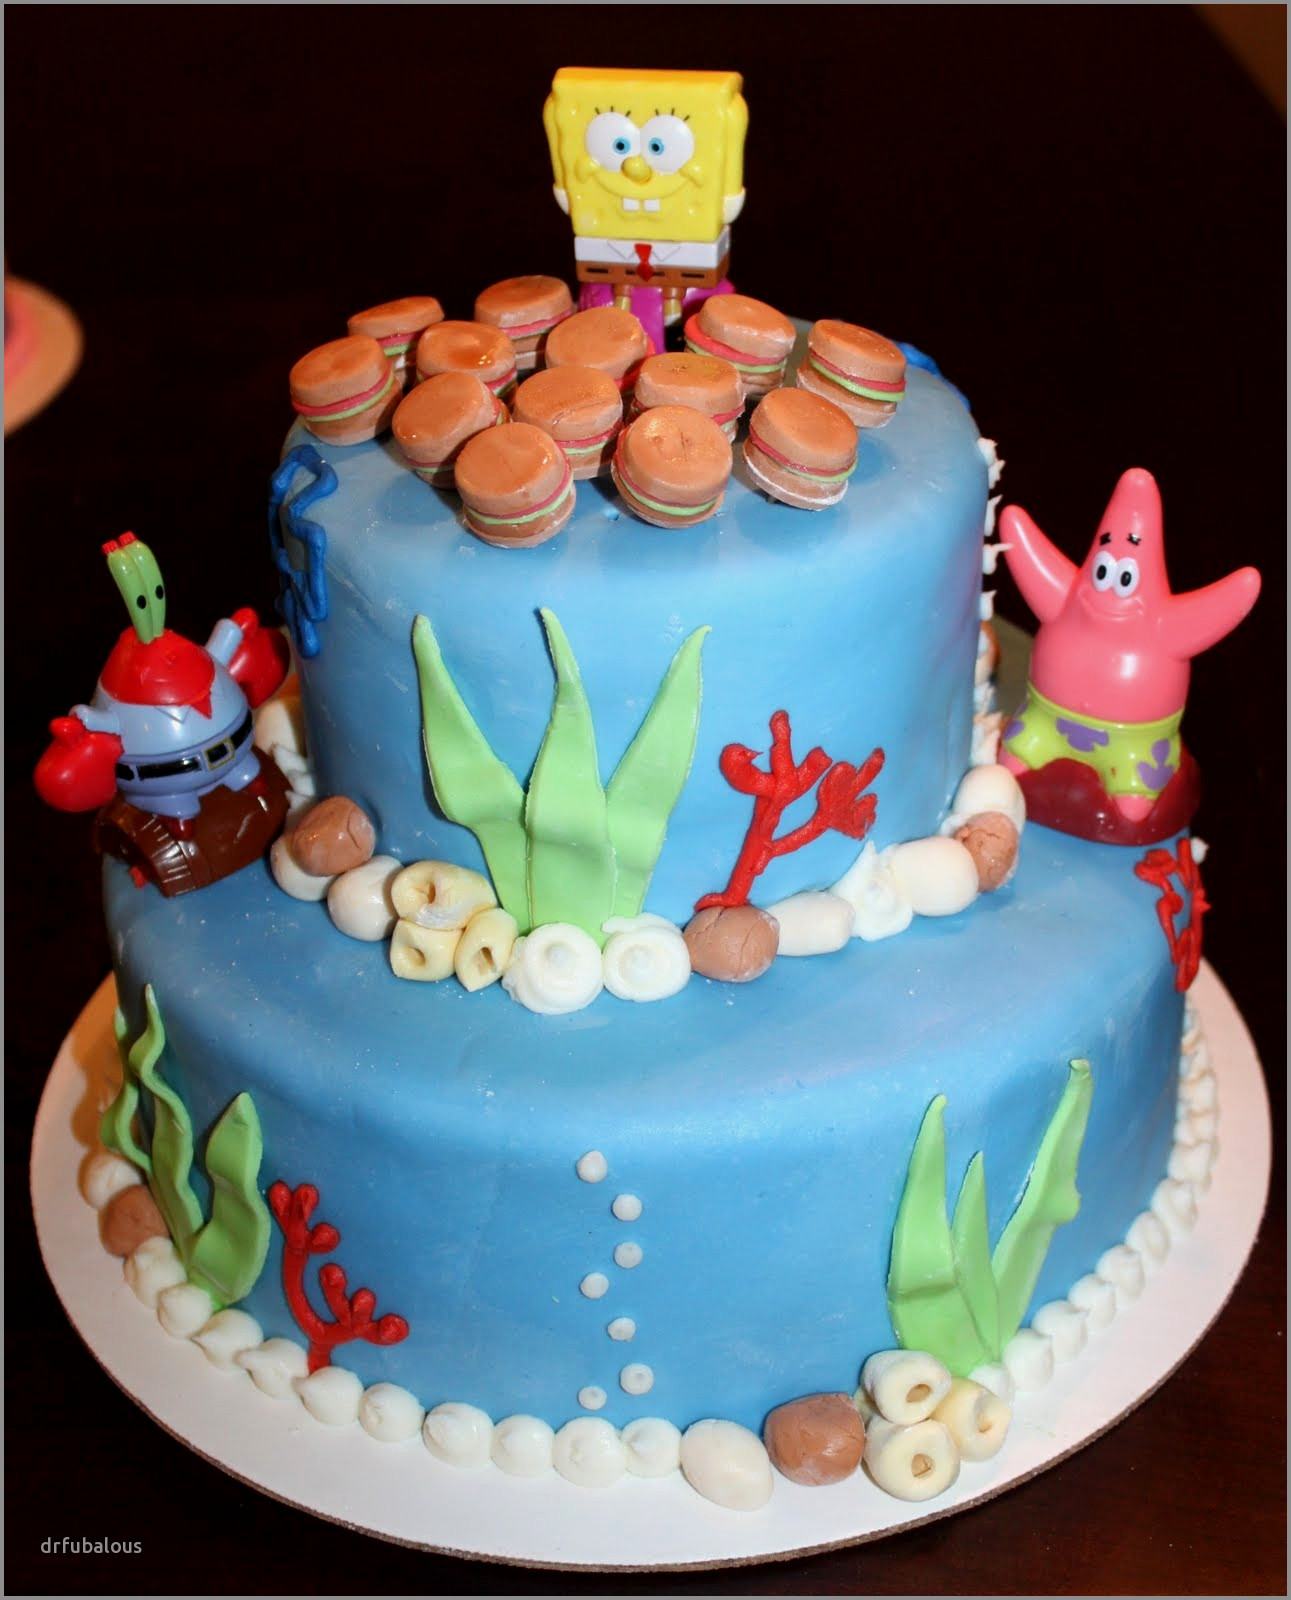 Kroger Birthday Cake
 25 Creative Picture of Kroger Bakery Birthday Cakes